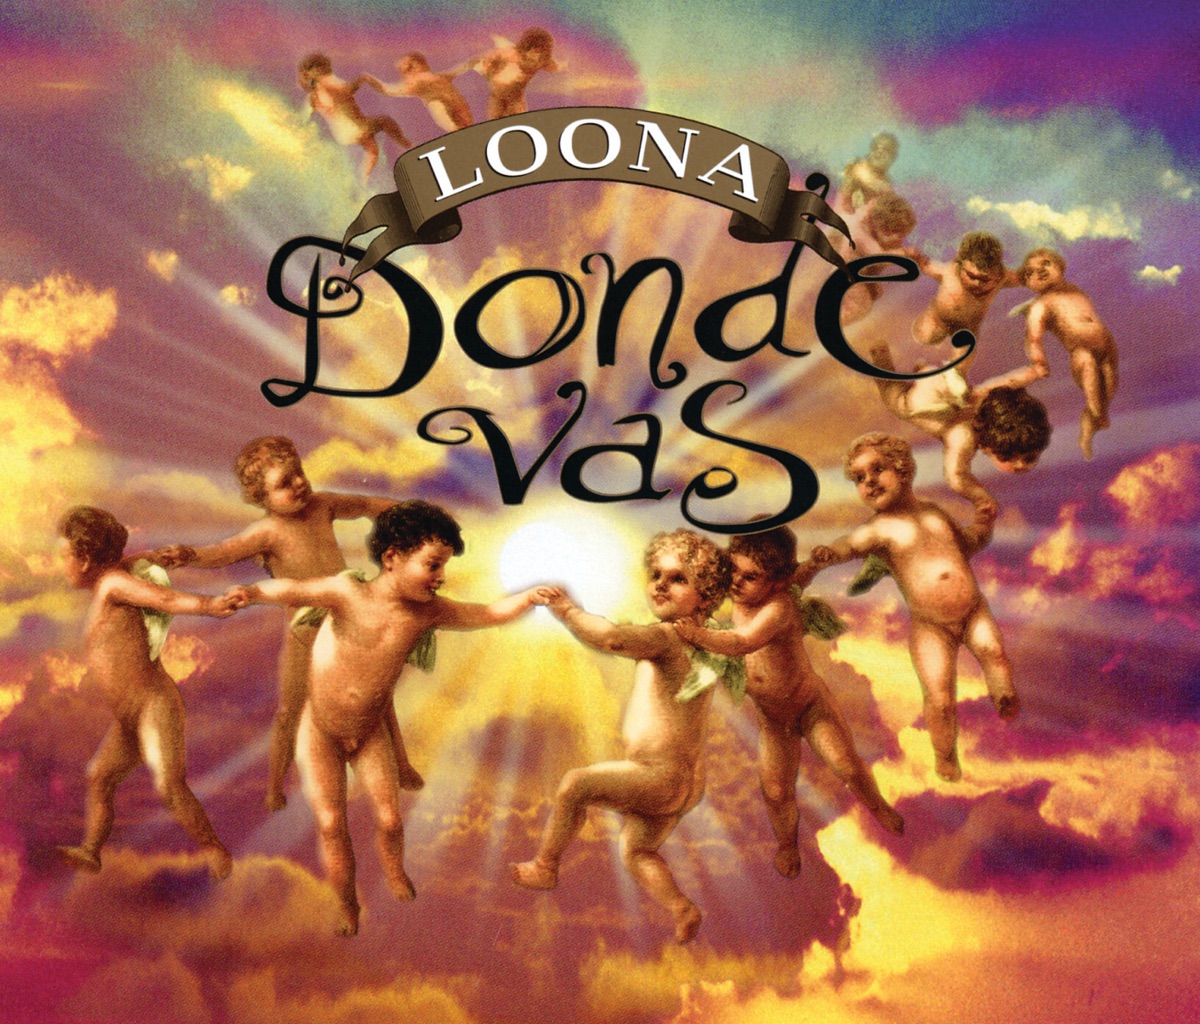 Loona — Donde vas cover artwork